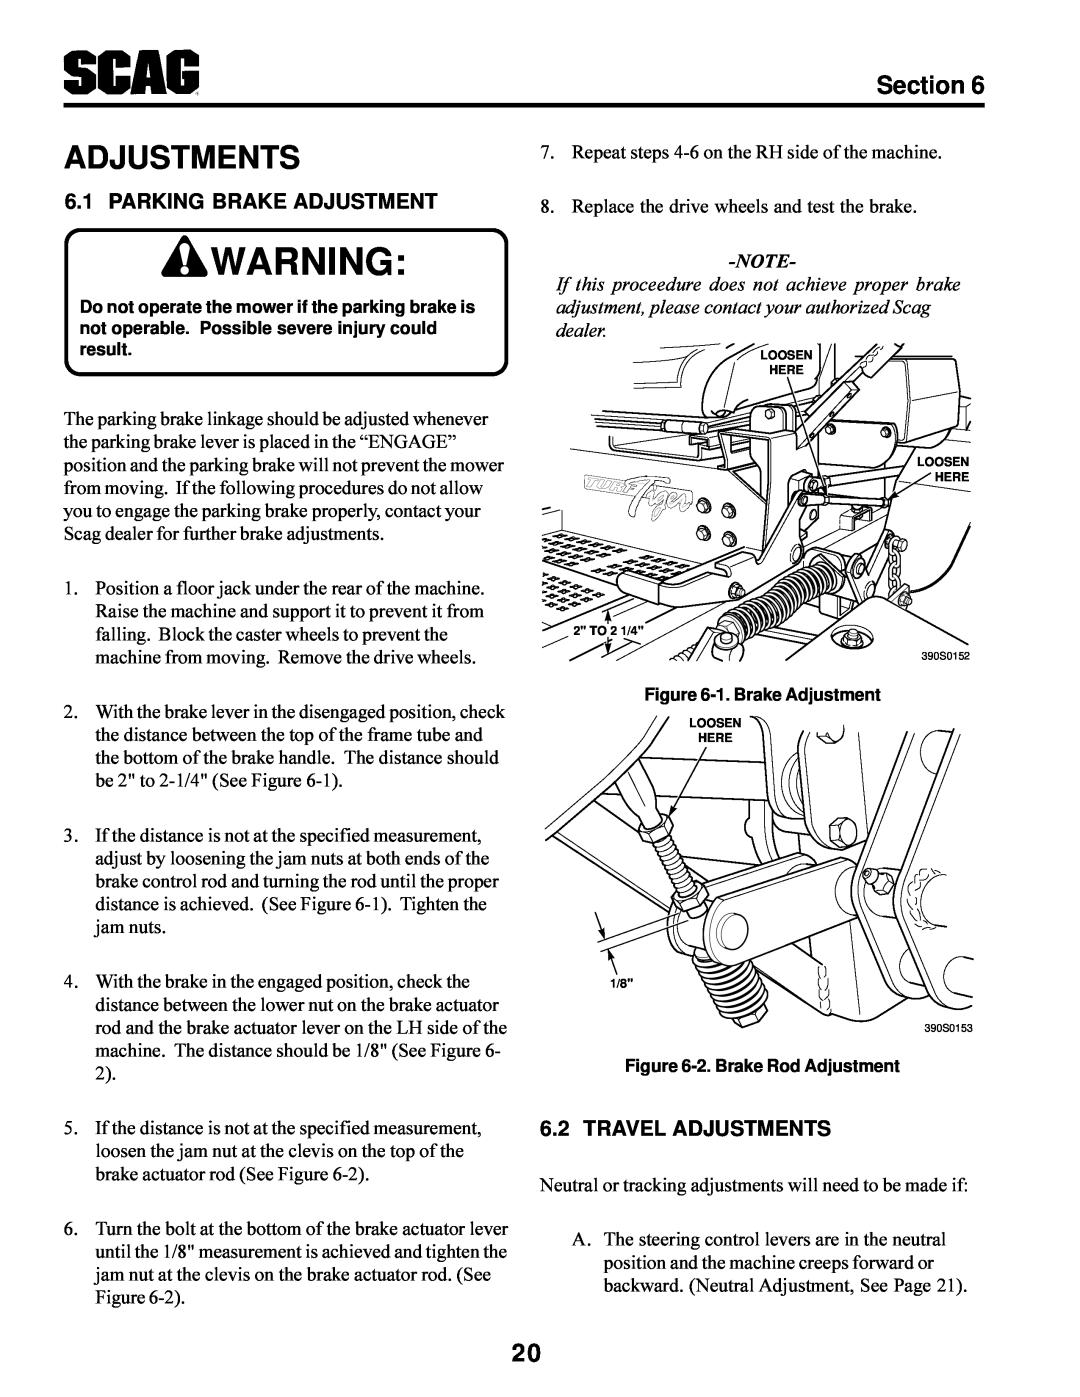 Scag Power Equipment STT-31BSG manual Parking Brake Adjustment, Travel Adjustments, Section 